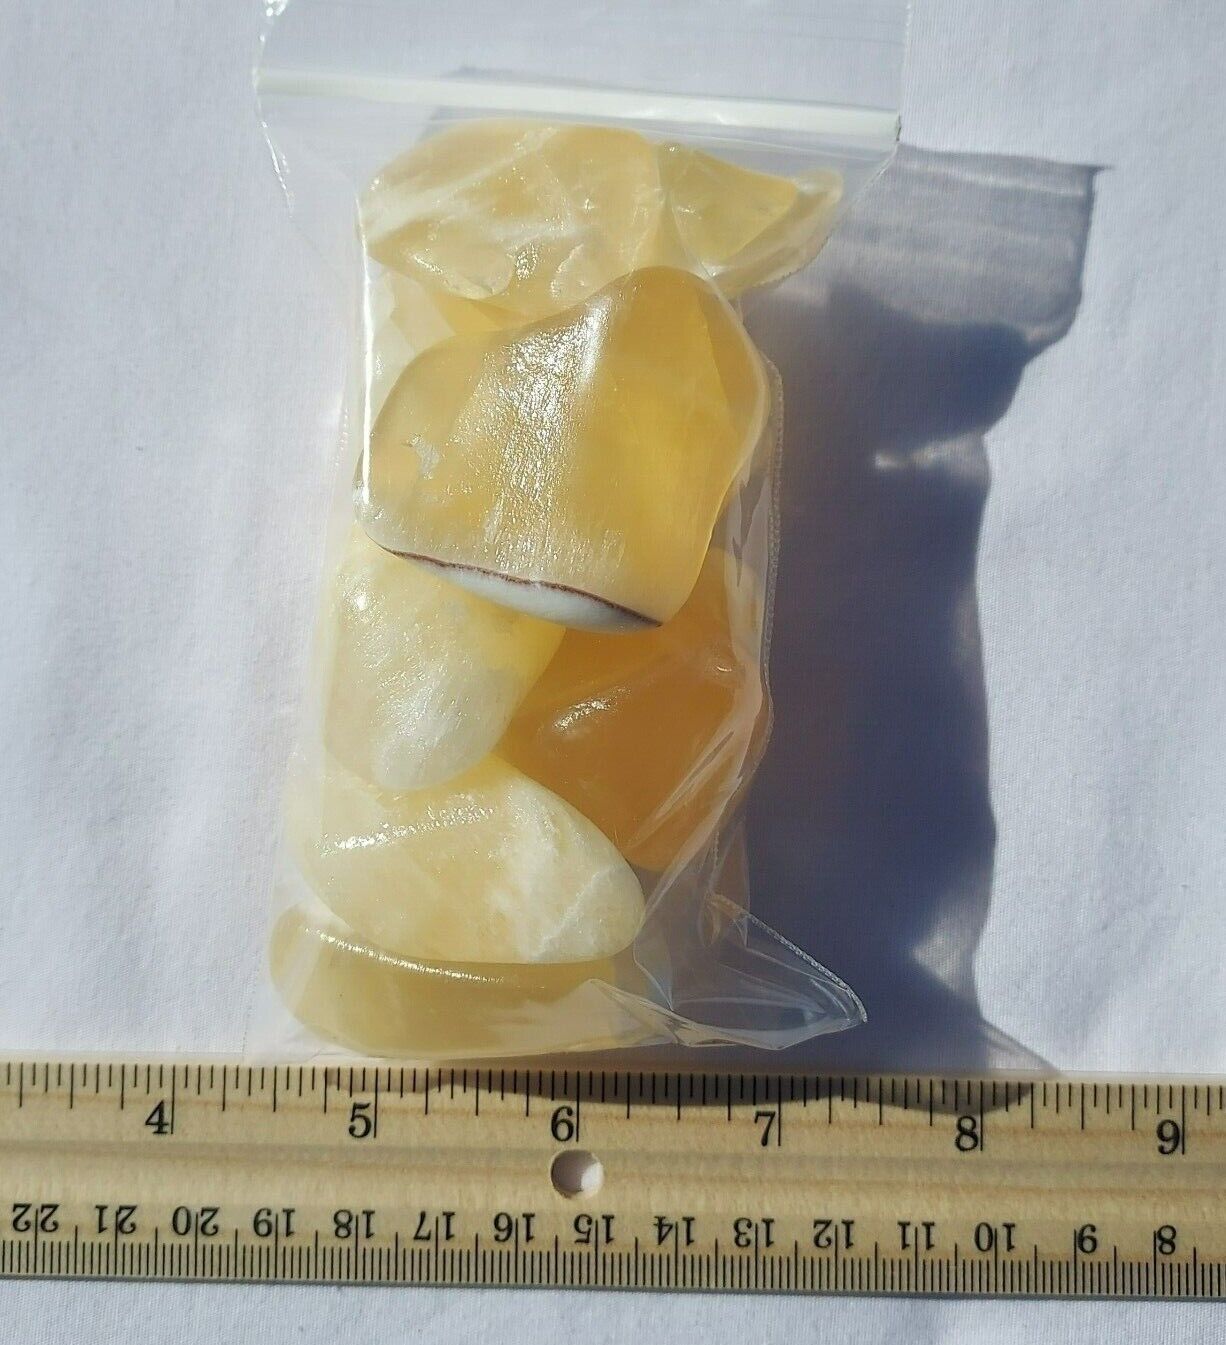 Utah Honeycomb Calcite Tumbled Stones  - Yellow Tumbled Gemstones Bulk